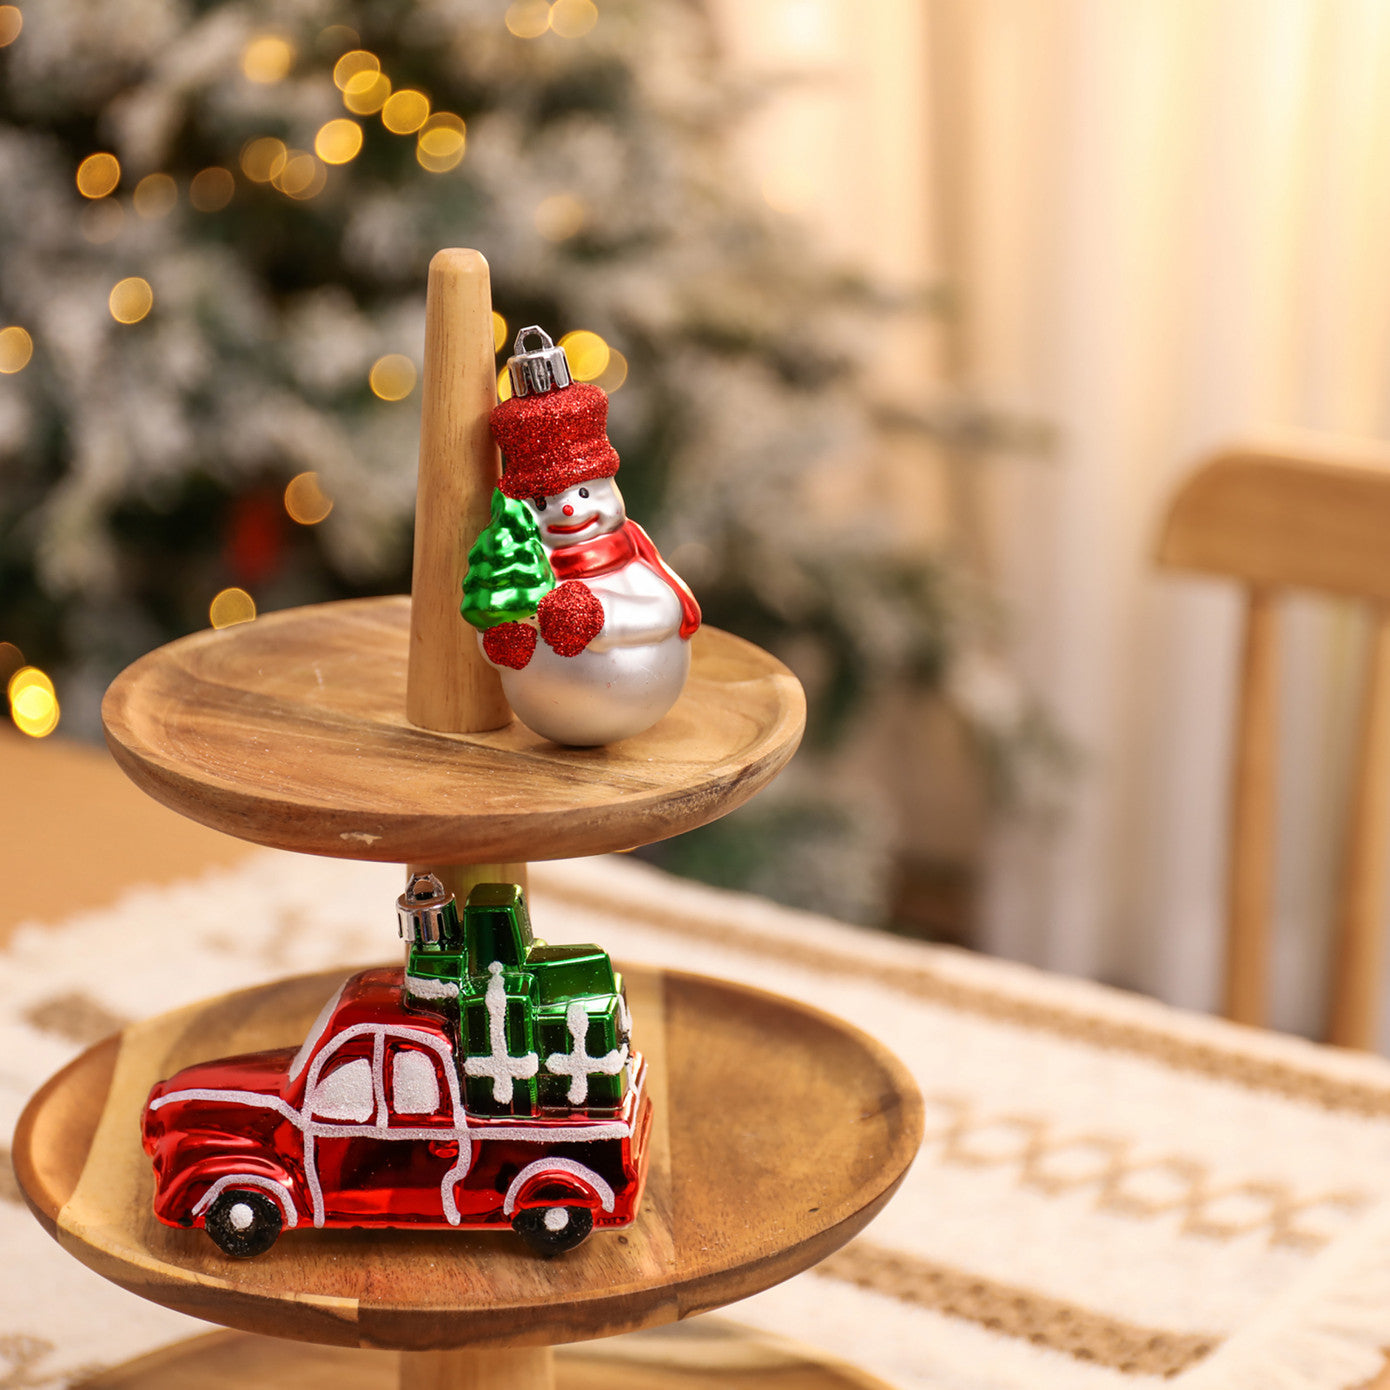 Set de decorațiuni pentru copaci Karaca Home Gift Truck & Snowman 2 piese